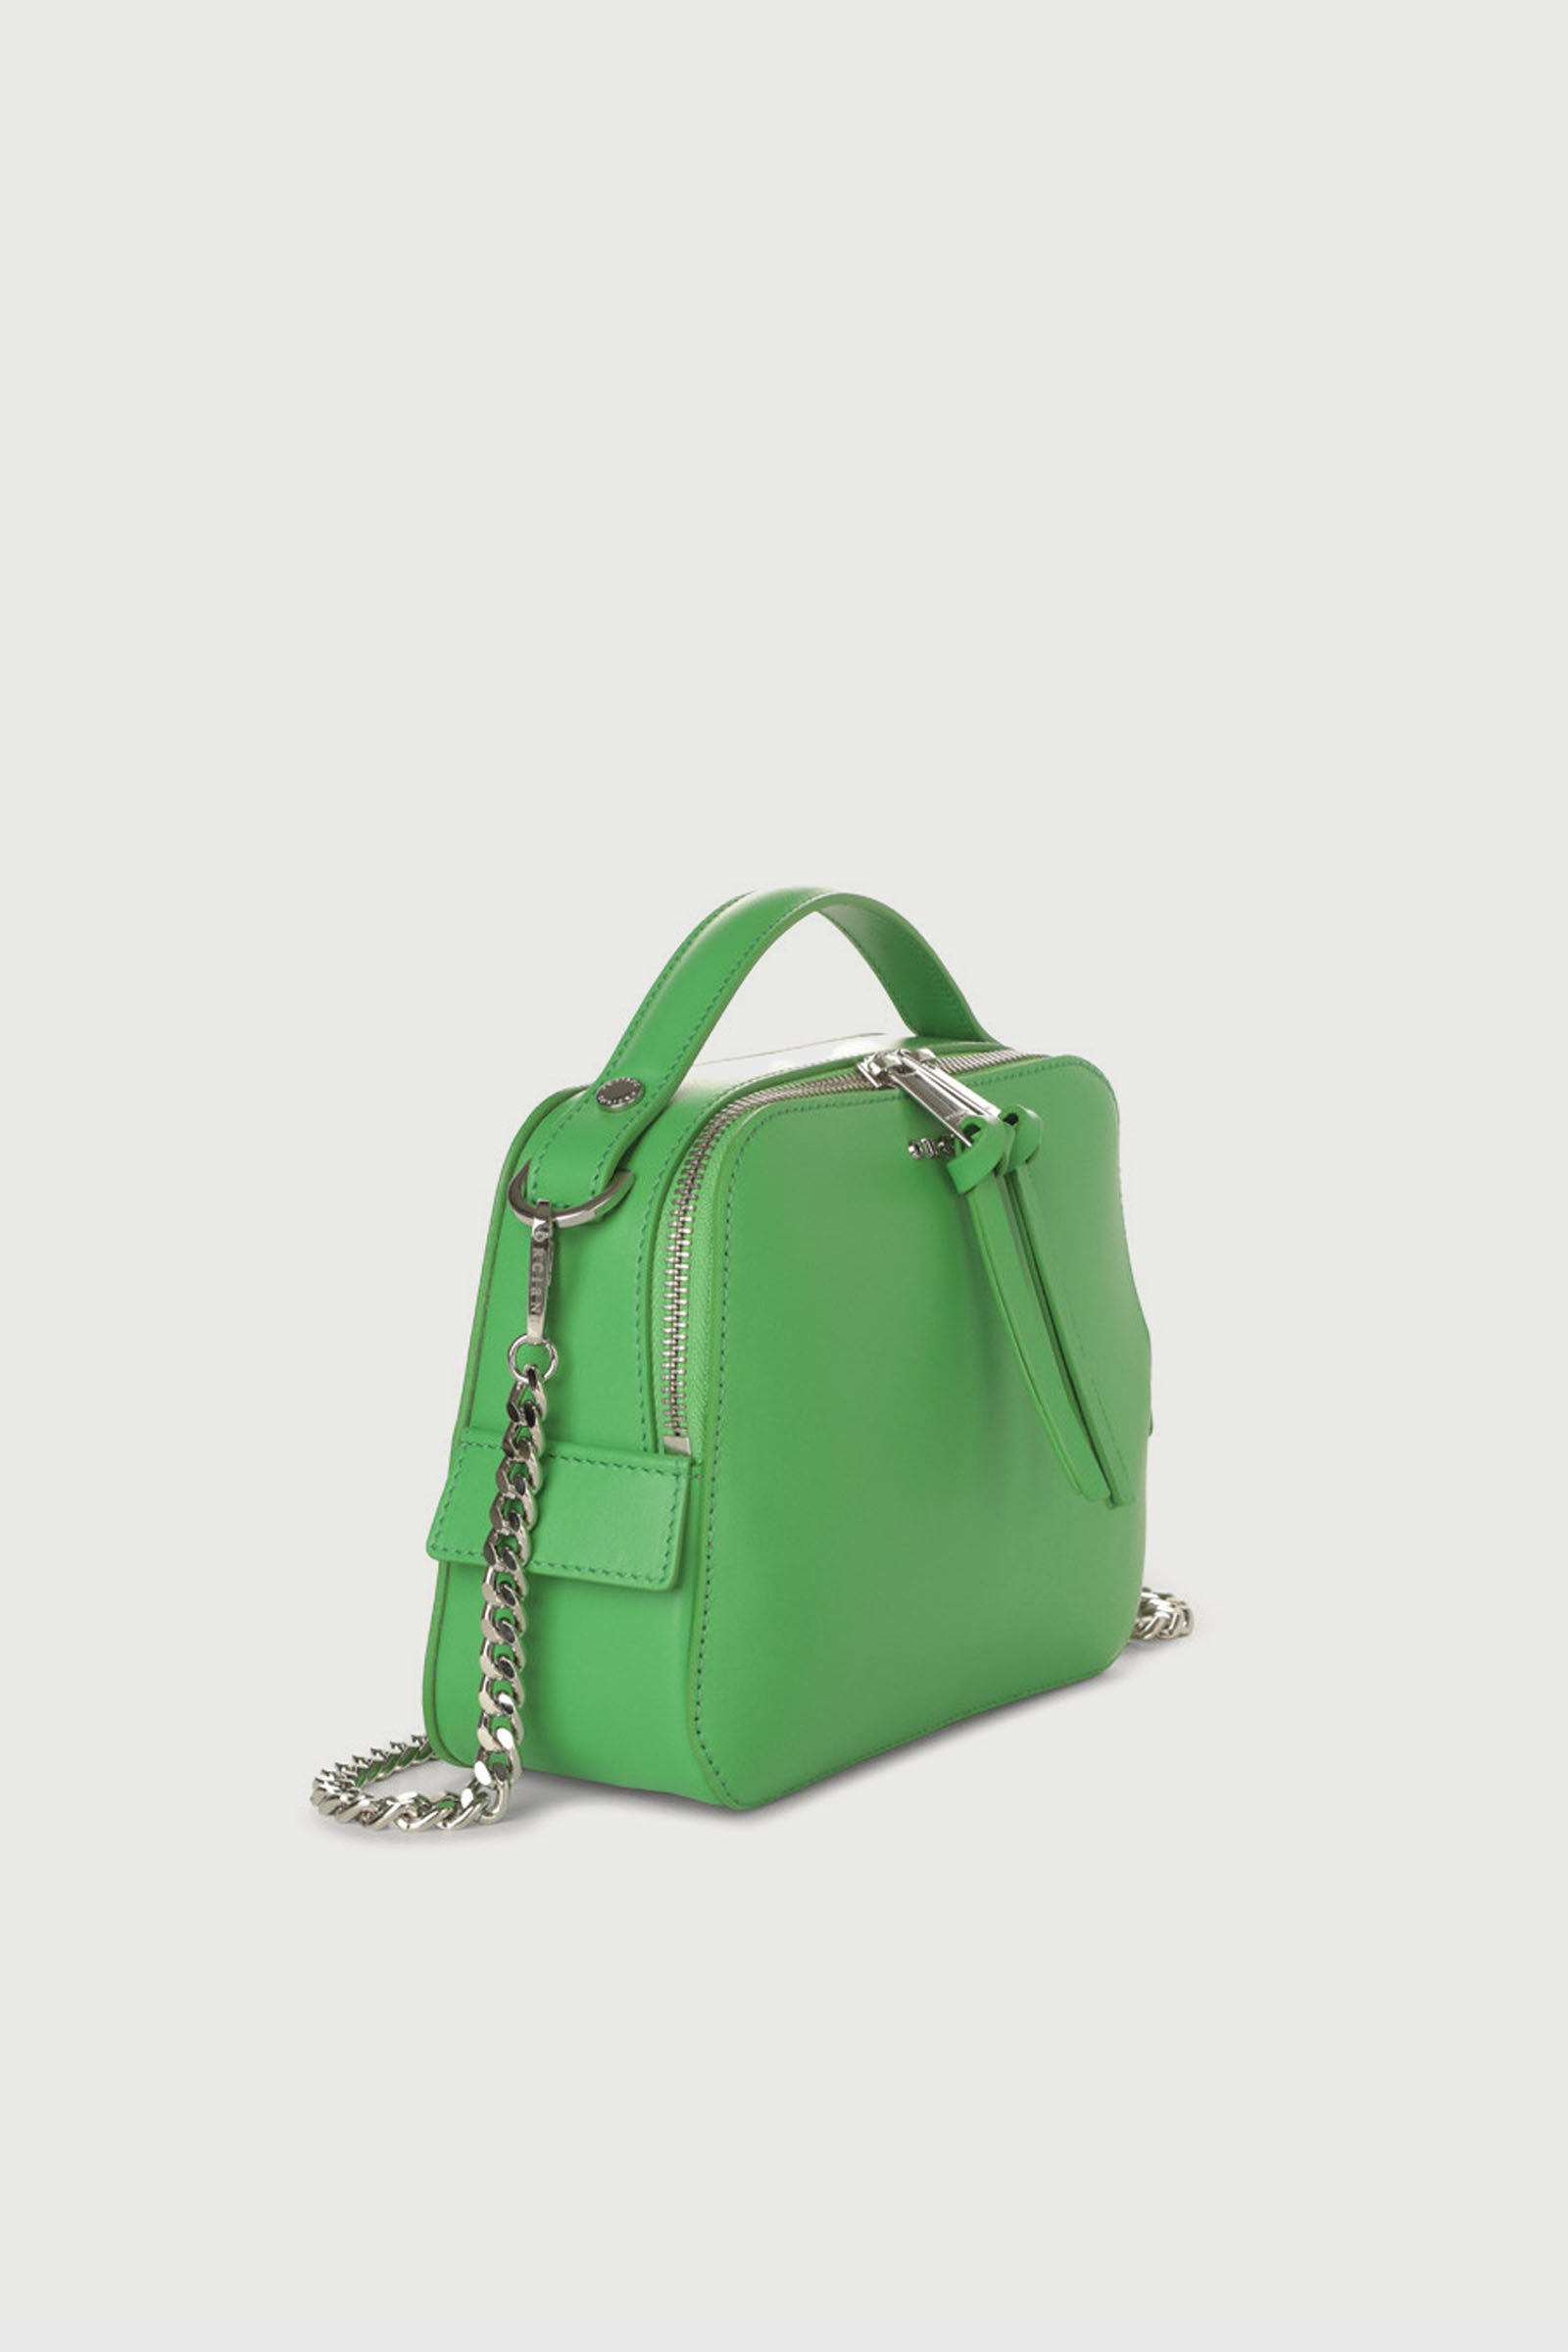 Orciani Mini Chéri Vanity Bag in Mint Green Leather - 2